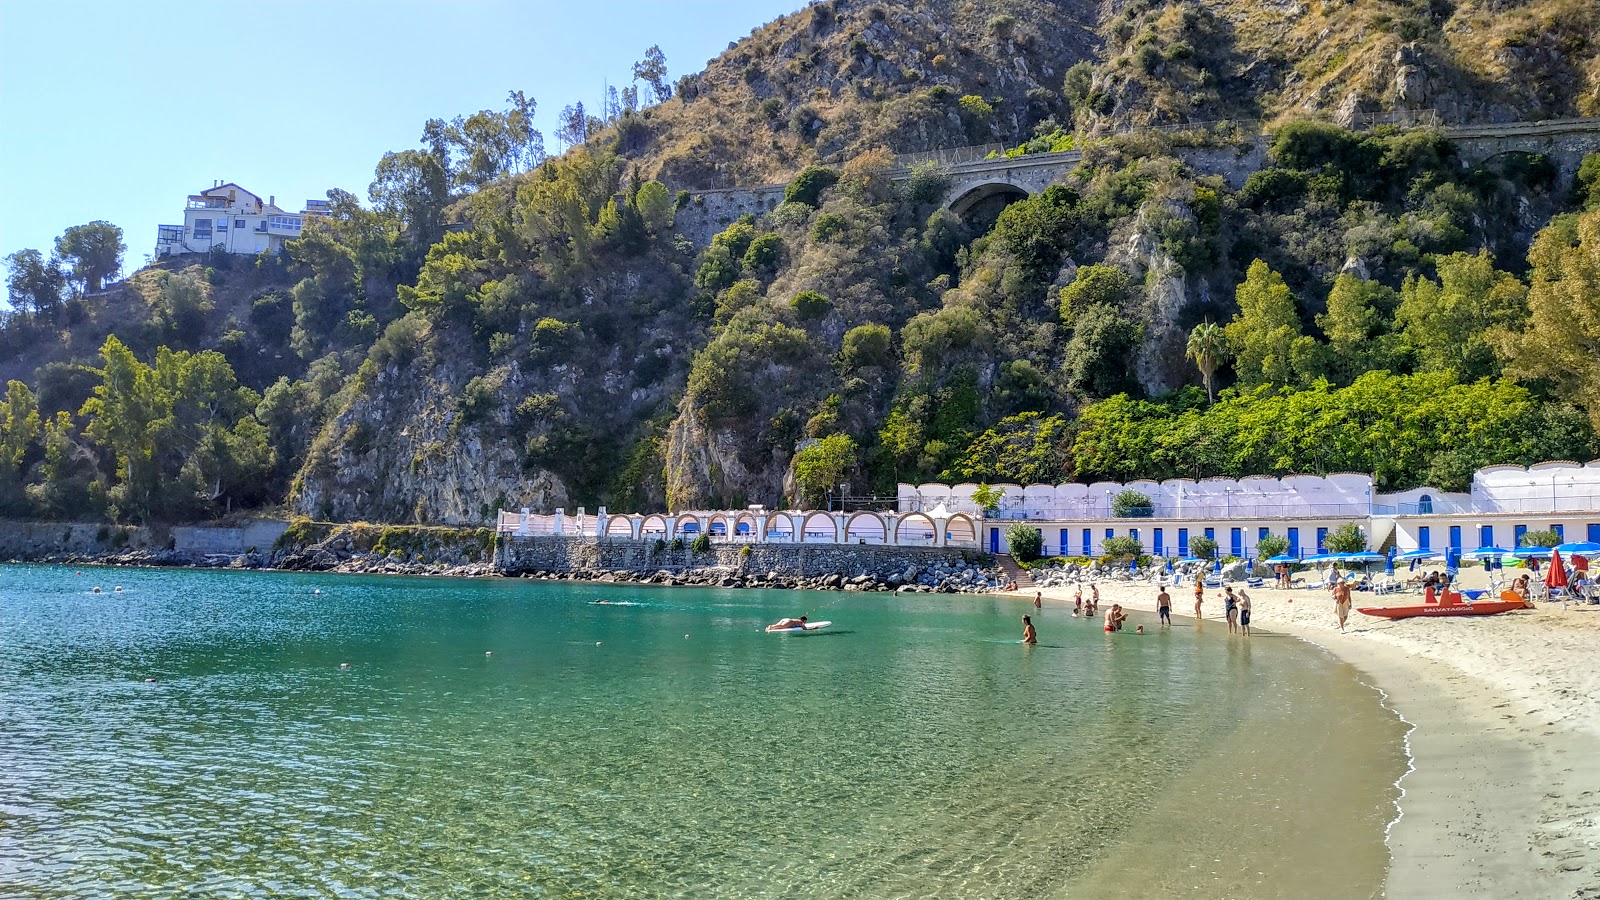 Foto von Spiaggia di Copanello mit blaues wasser Oberfläche